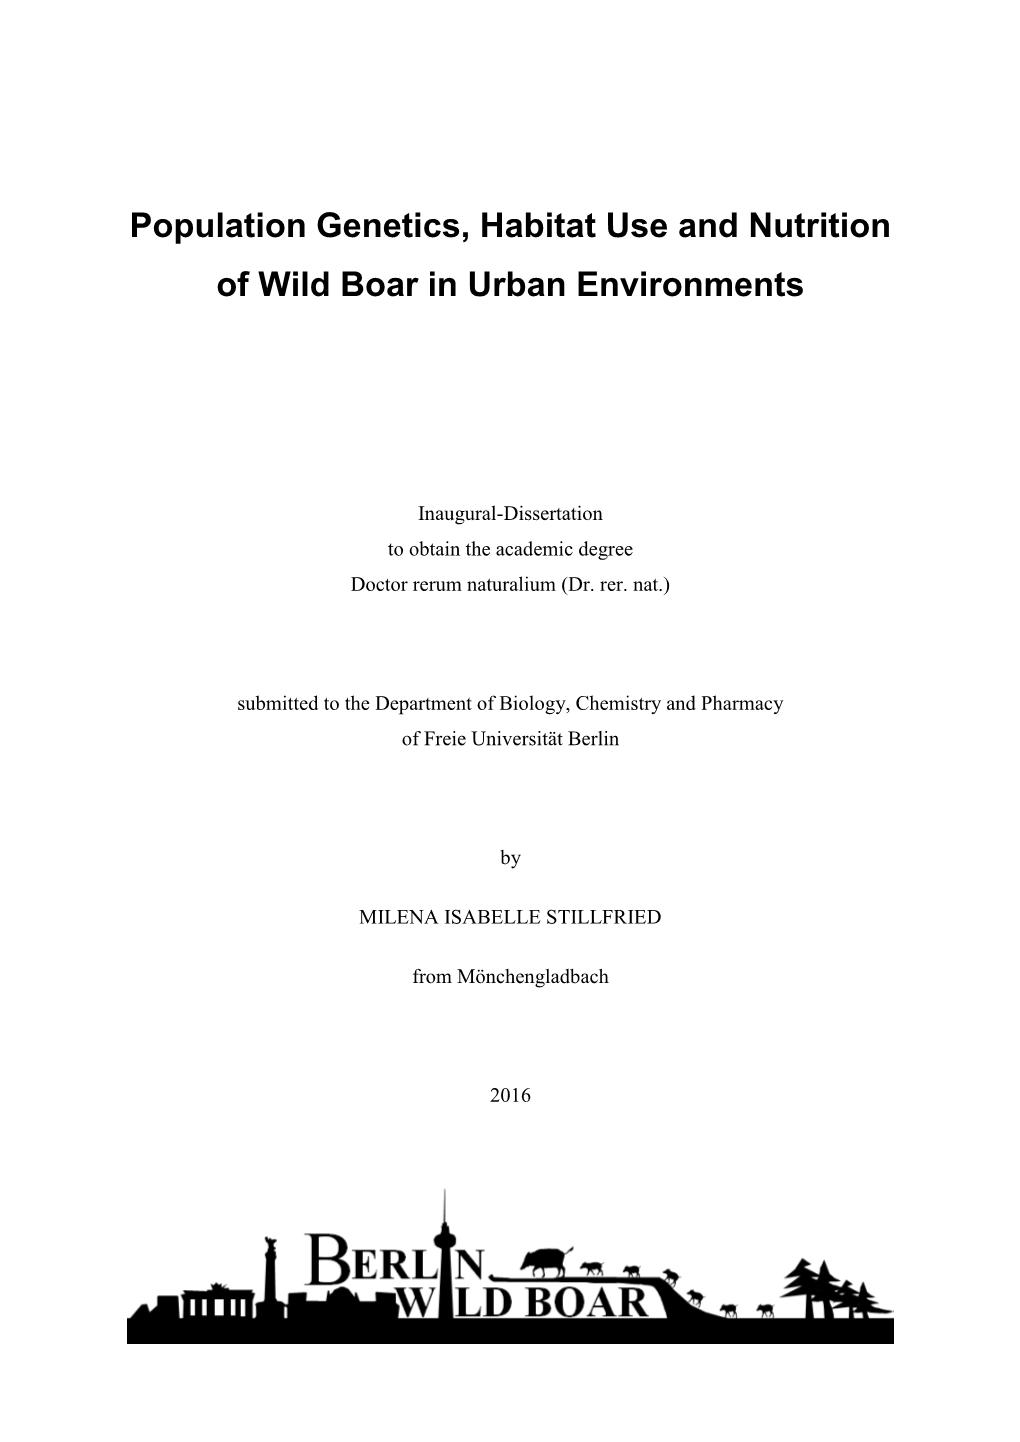 Population Genetics, Habitat Use and Nutrition of Wild Boar in Urban Environments